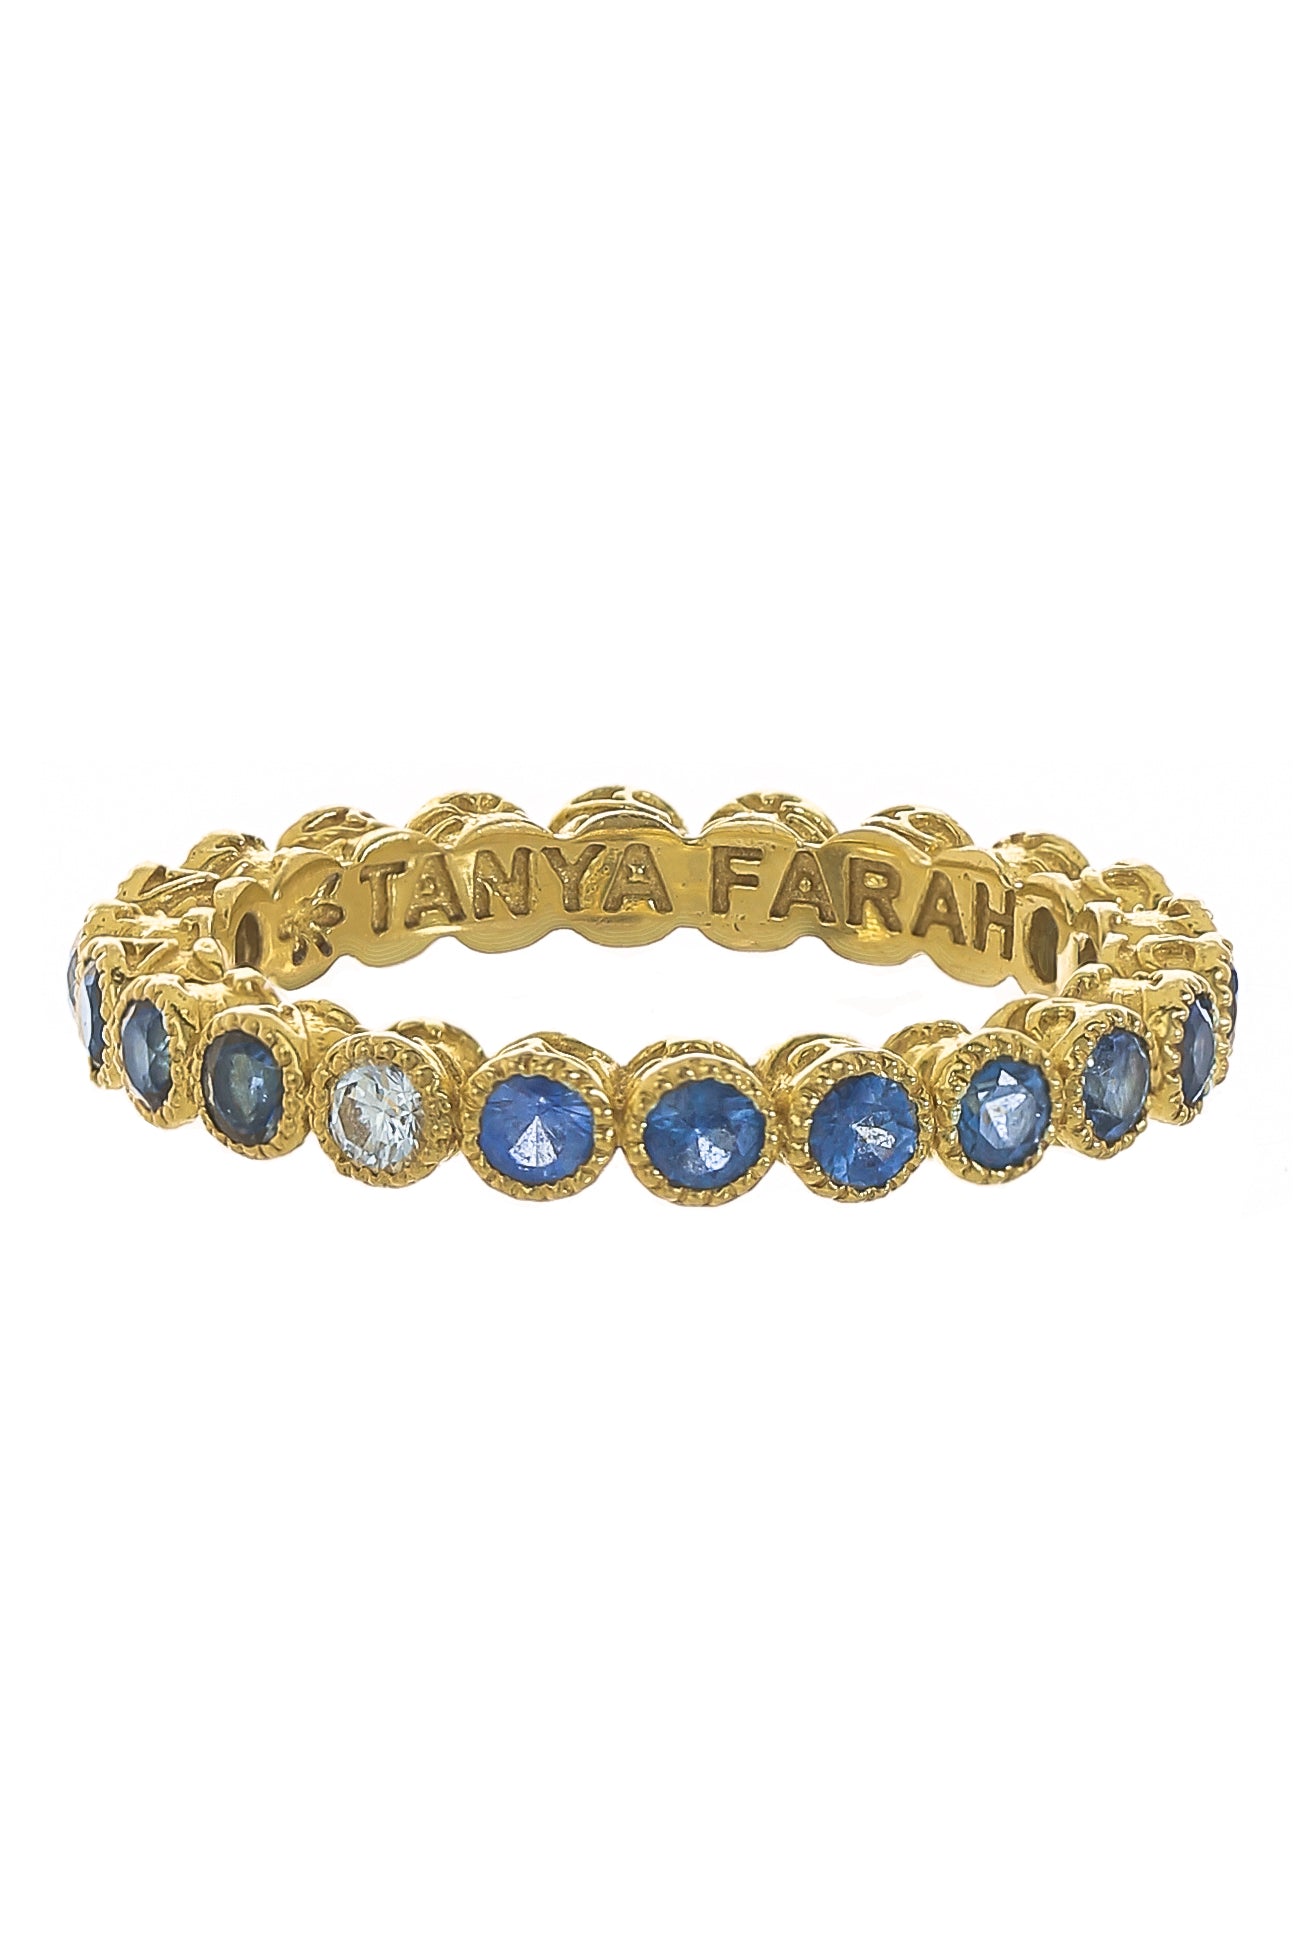 TANYA FARAH-Modern Etruscan Blue Sapphire Stack Ring-YELLOW GOLD